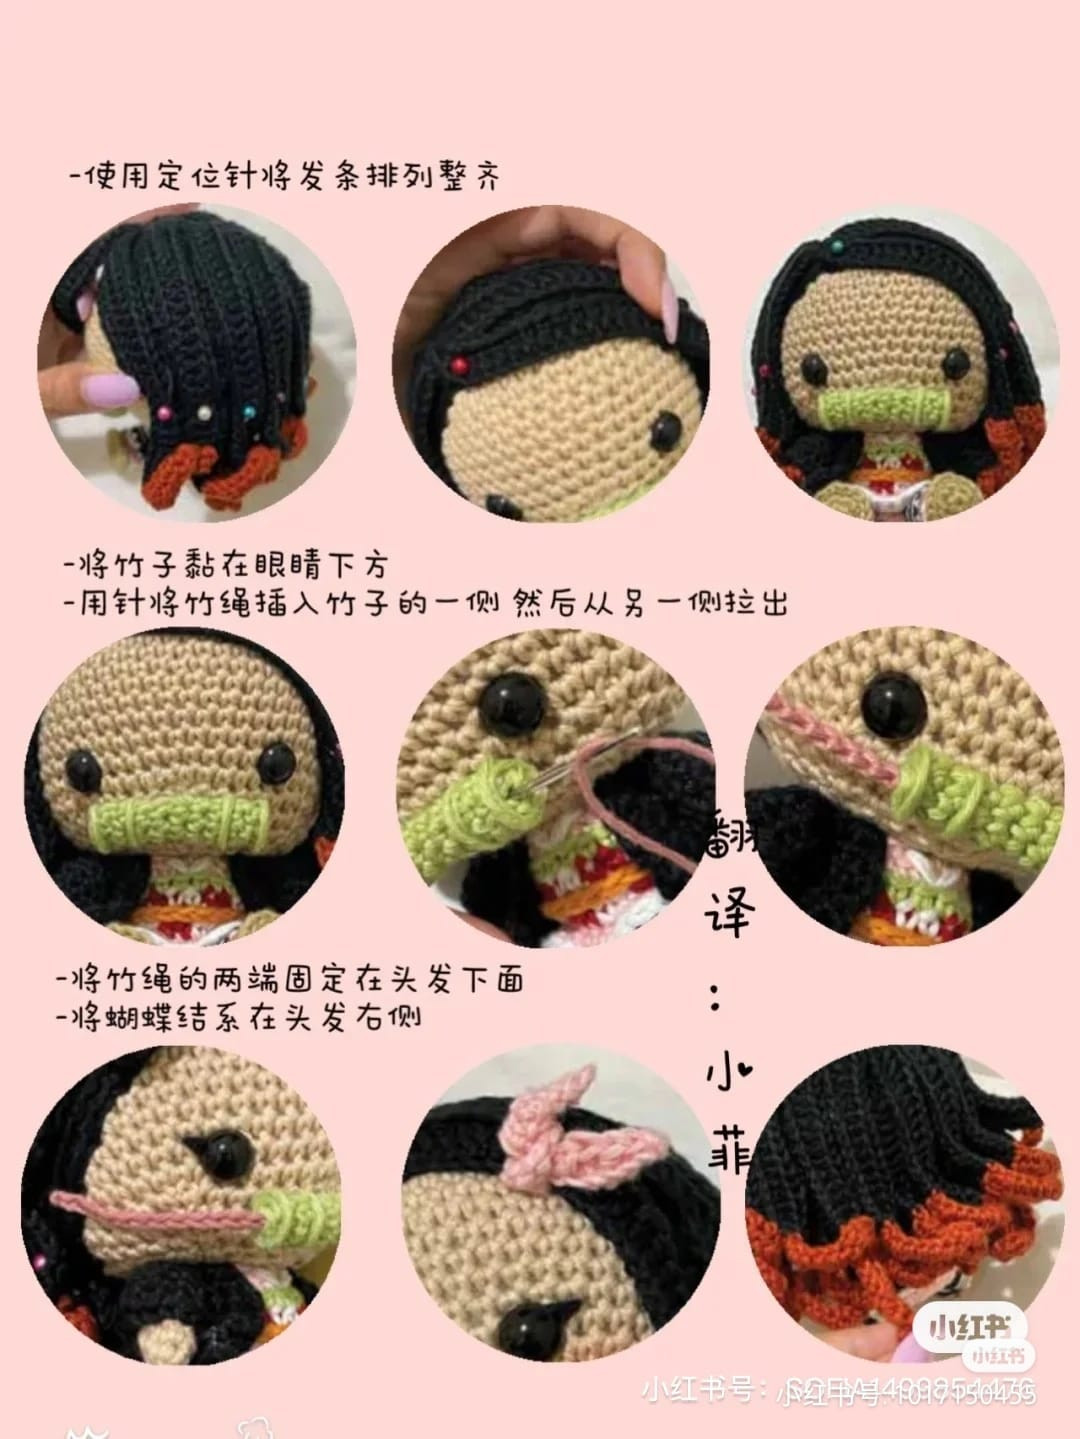 Black hair doll crochet pattern, wearing a skirt